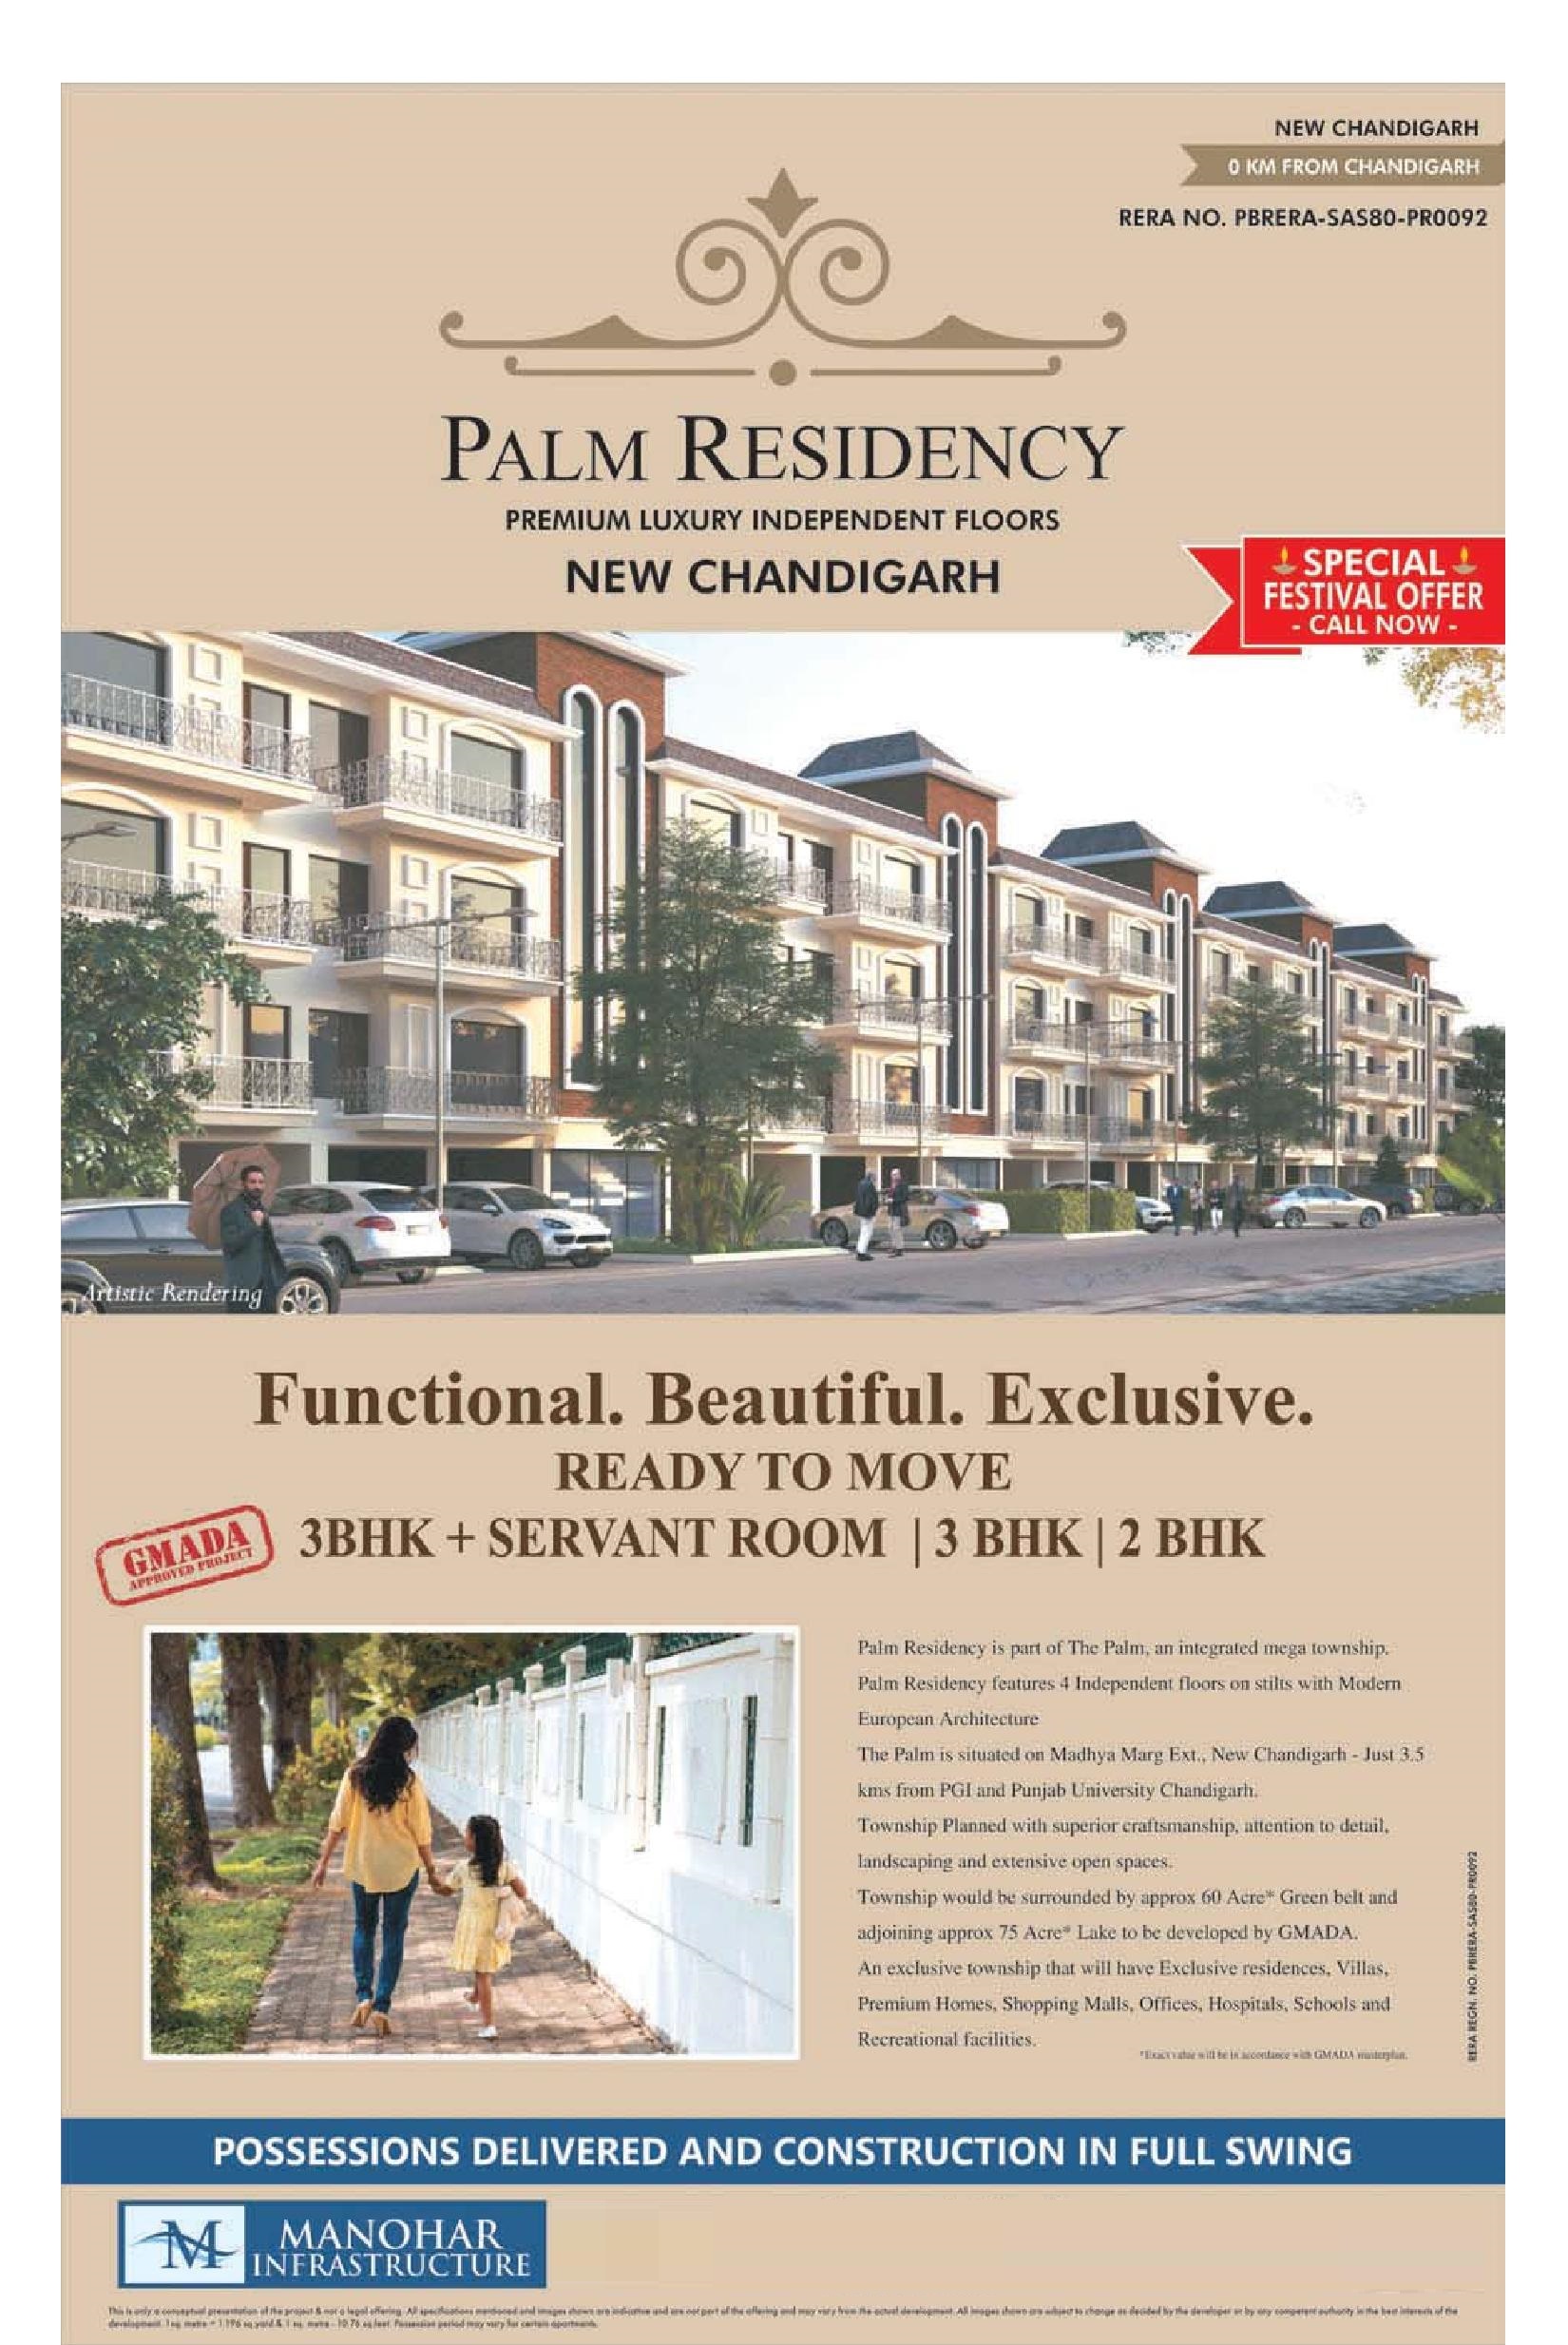 Manohar Palm Residency launching premium luxury independent floors in New Chandigarh Update